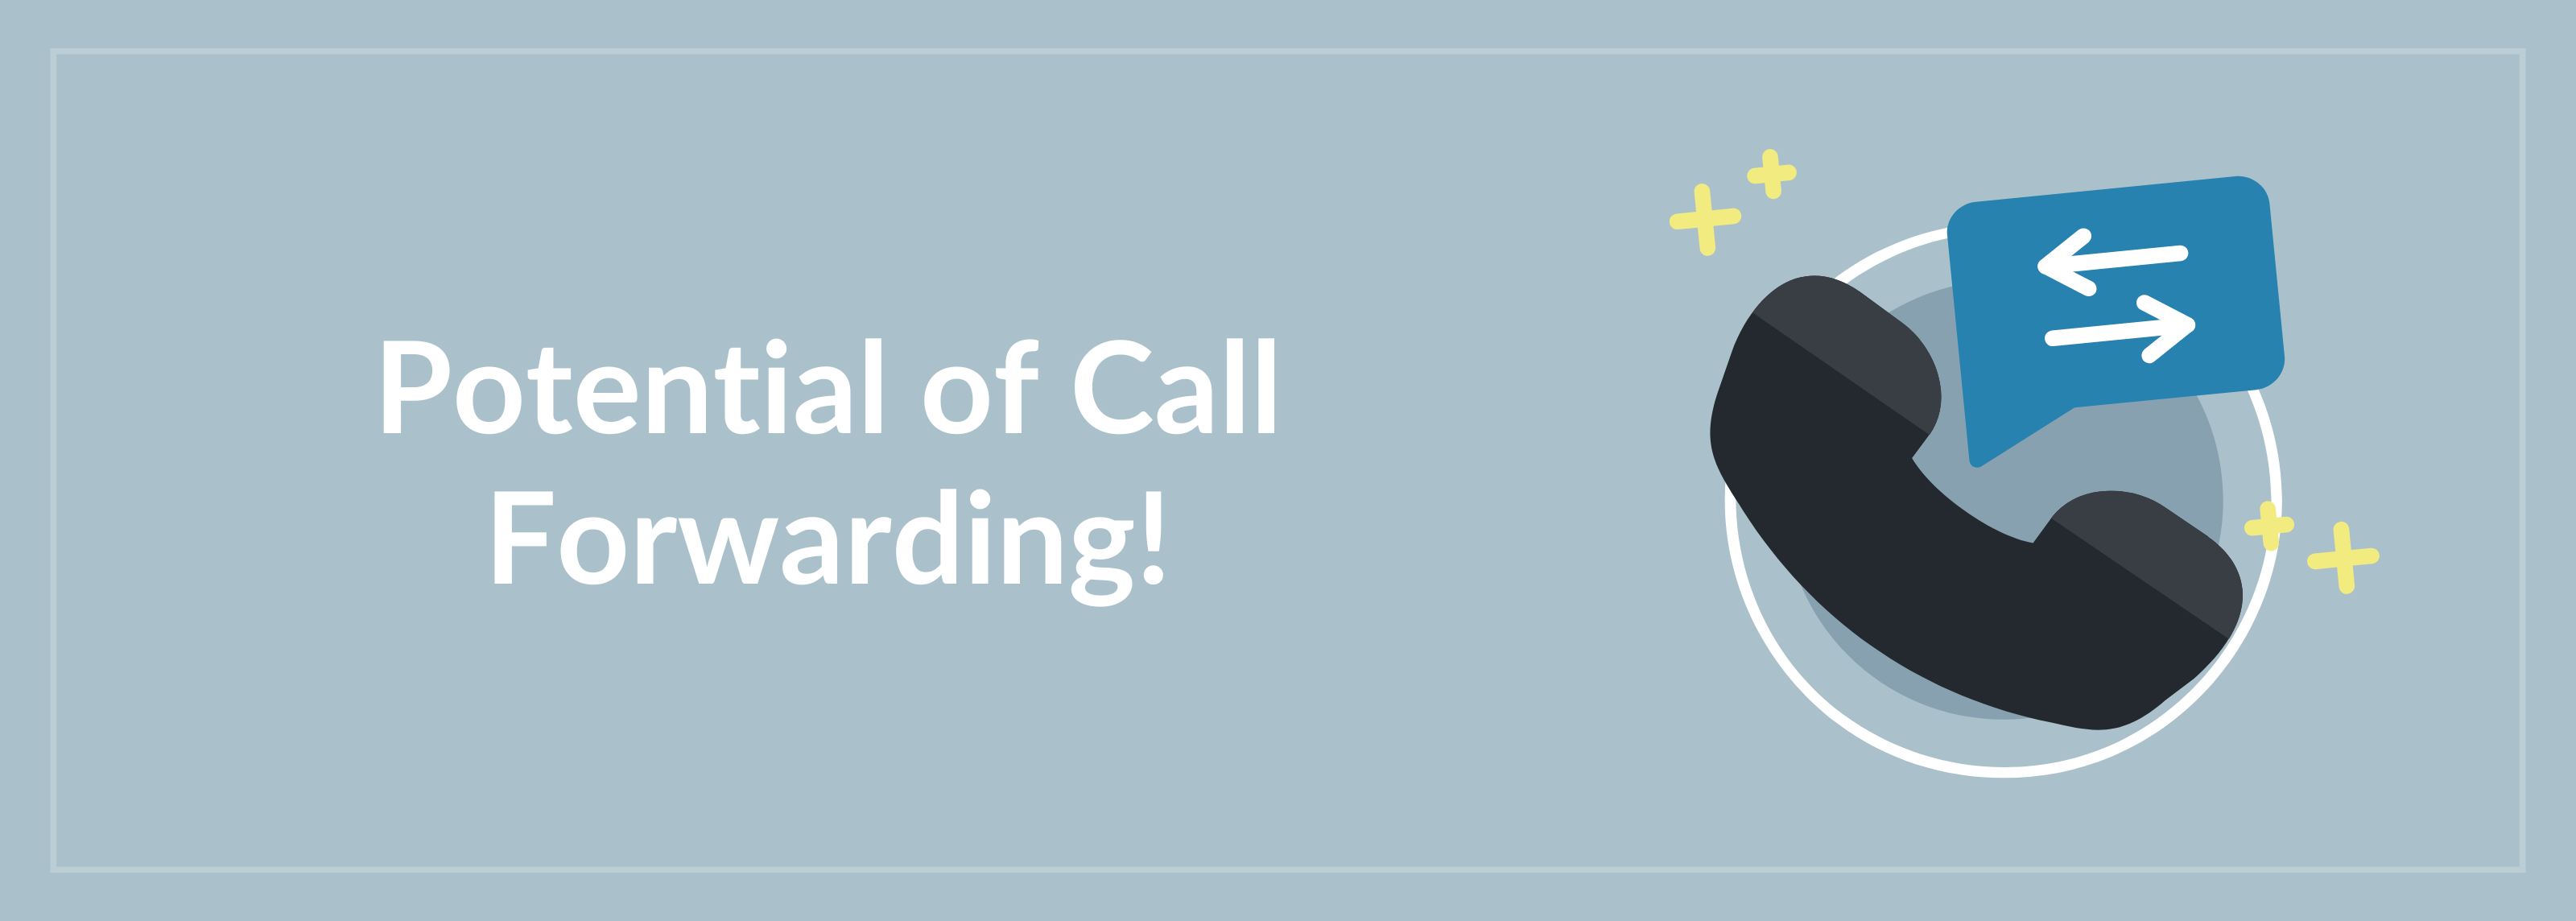 Potential of Call Forwarding